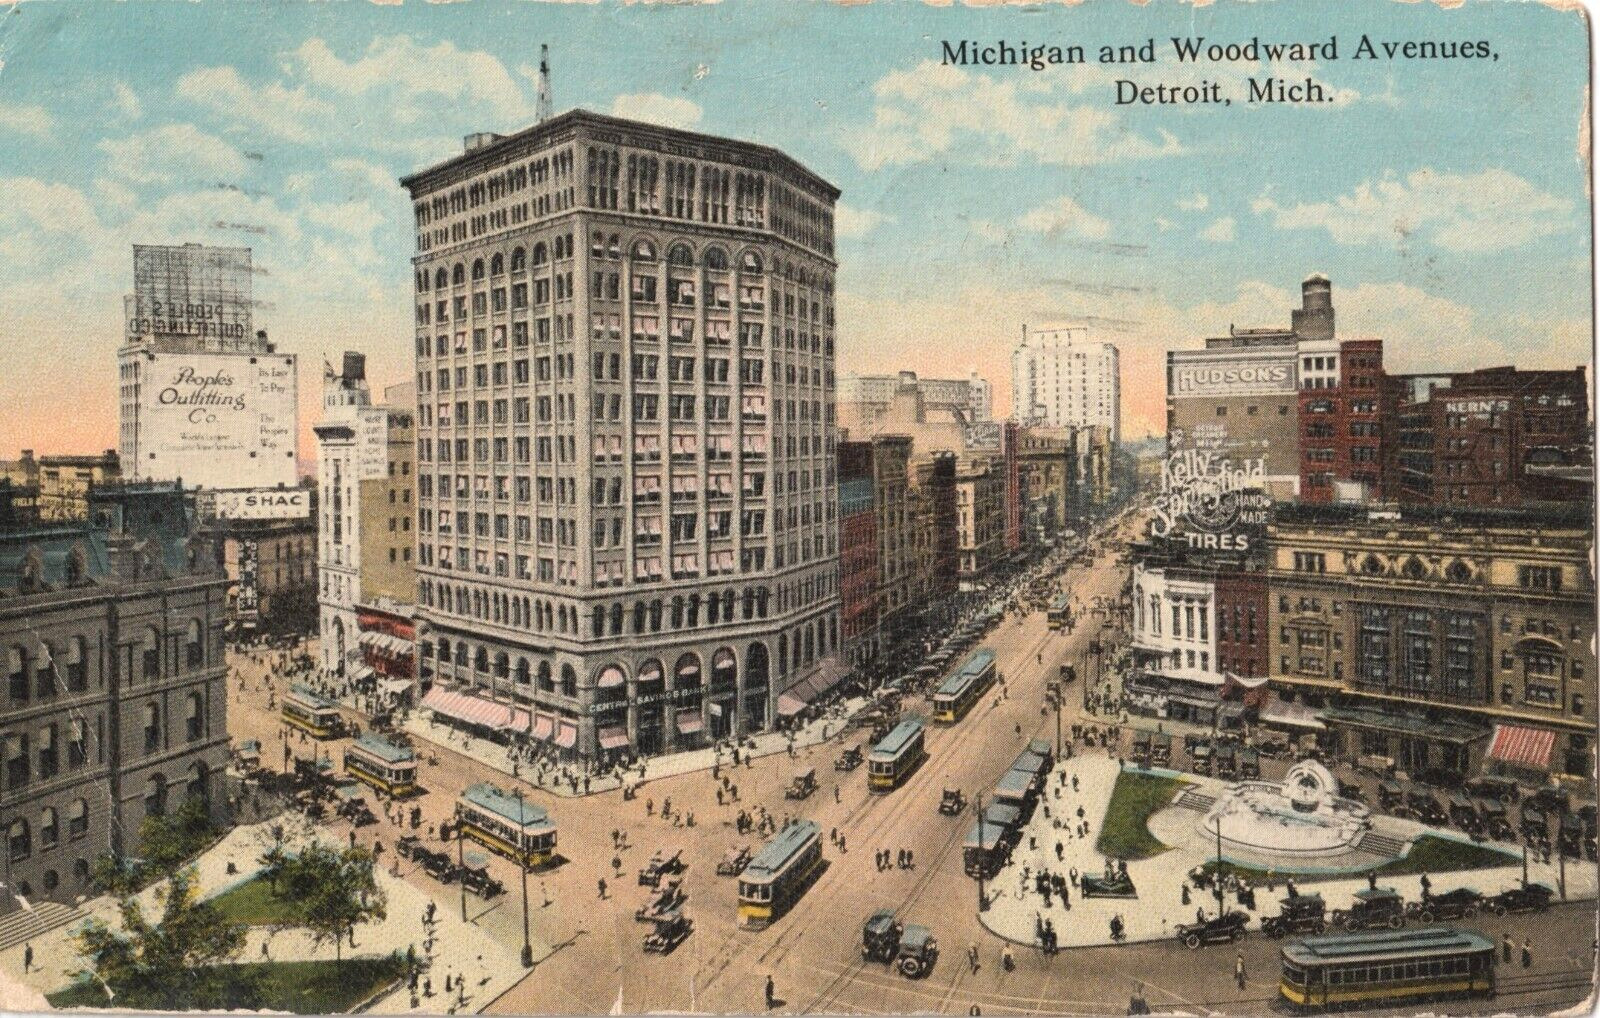 Michigan and Woodward Avenues-Detroit, Michigan MI antique 1918 posted postcard